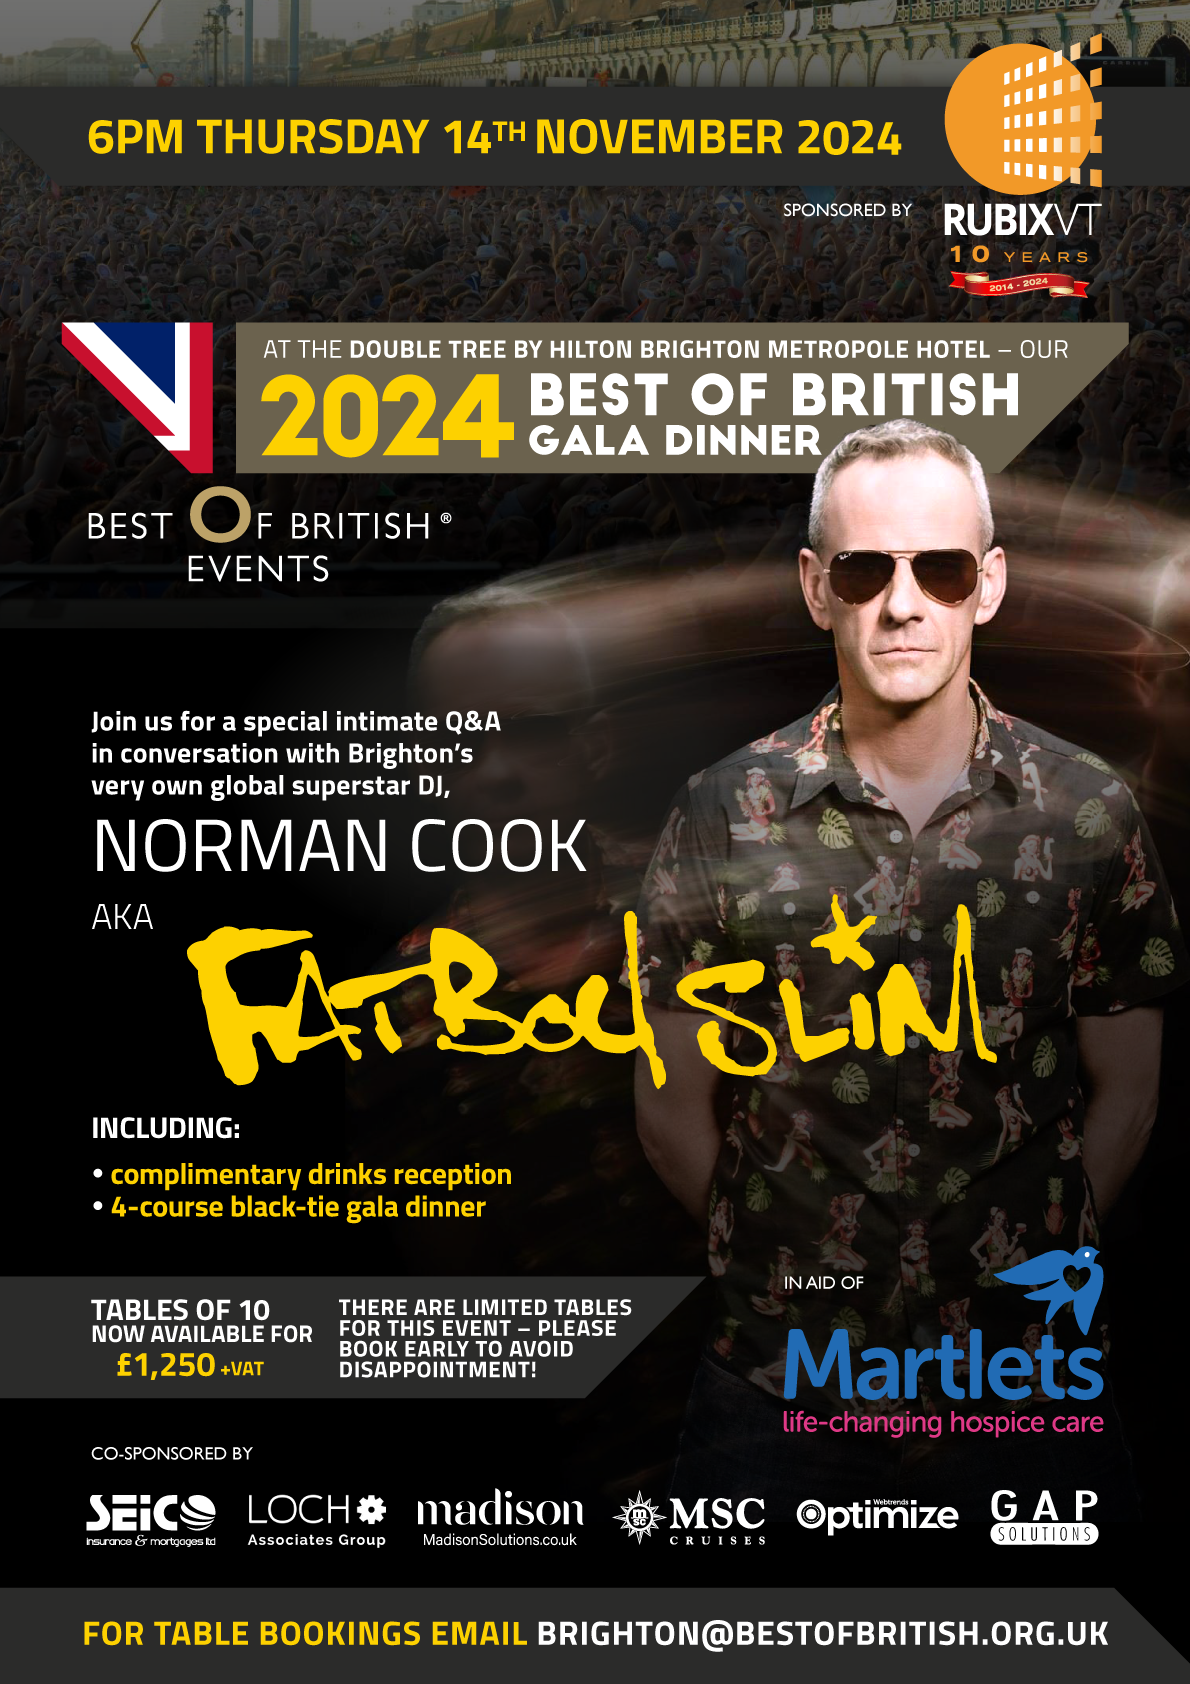 Best of British Gala Dinner 2024 - Norman Cook aka Fat Boy Slim